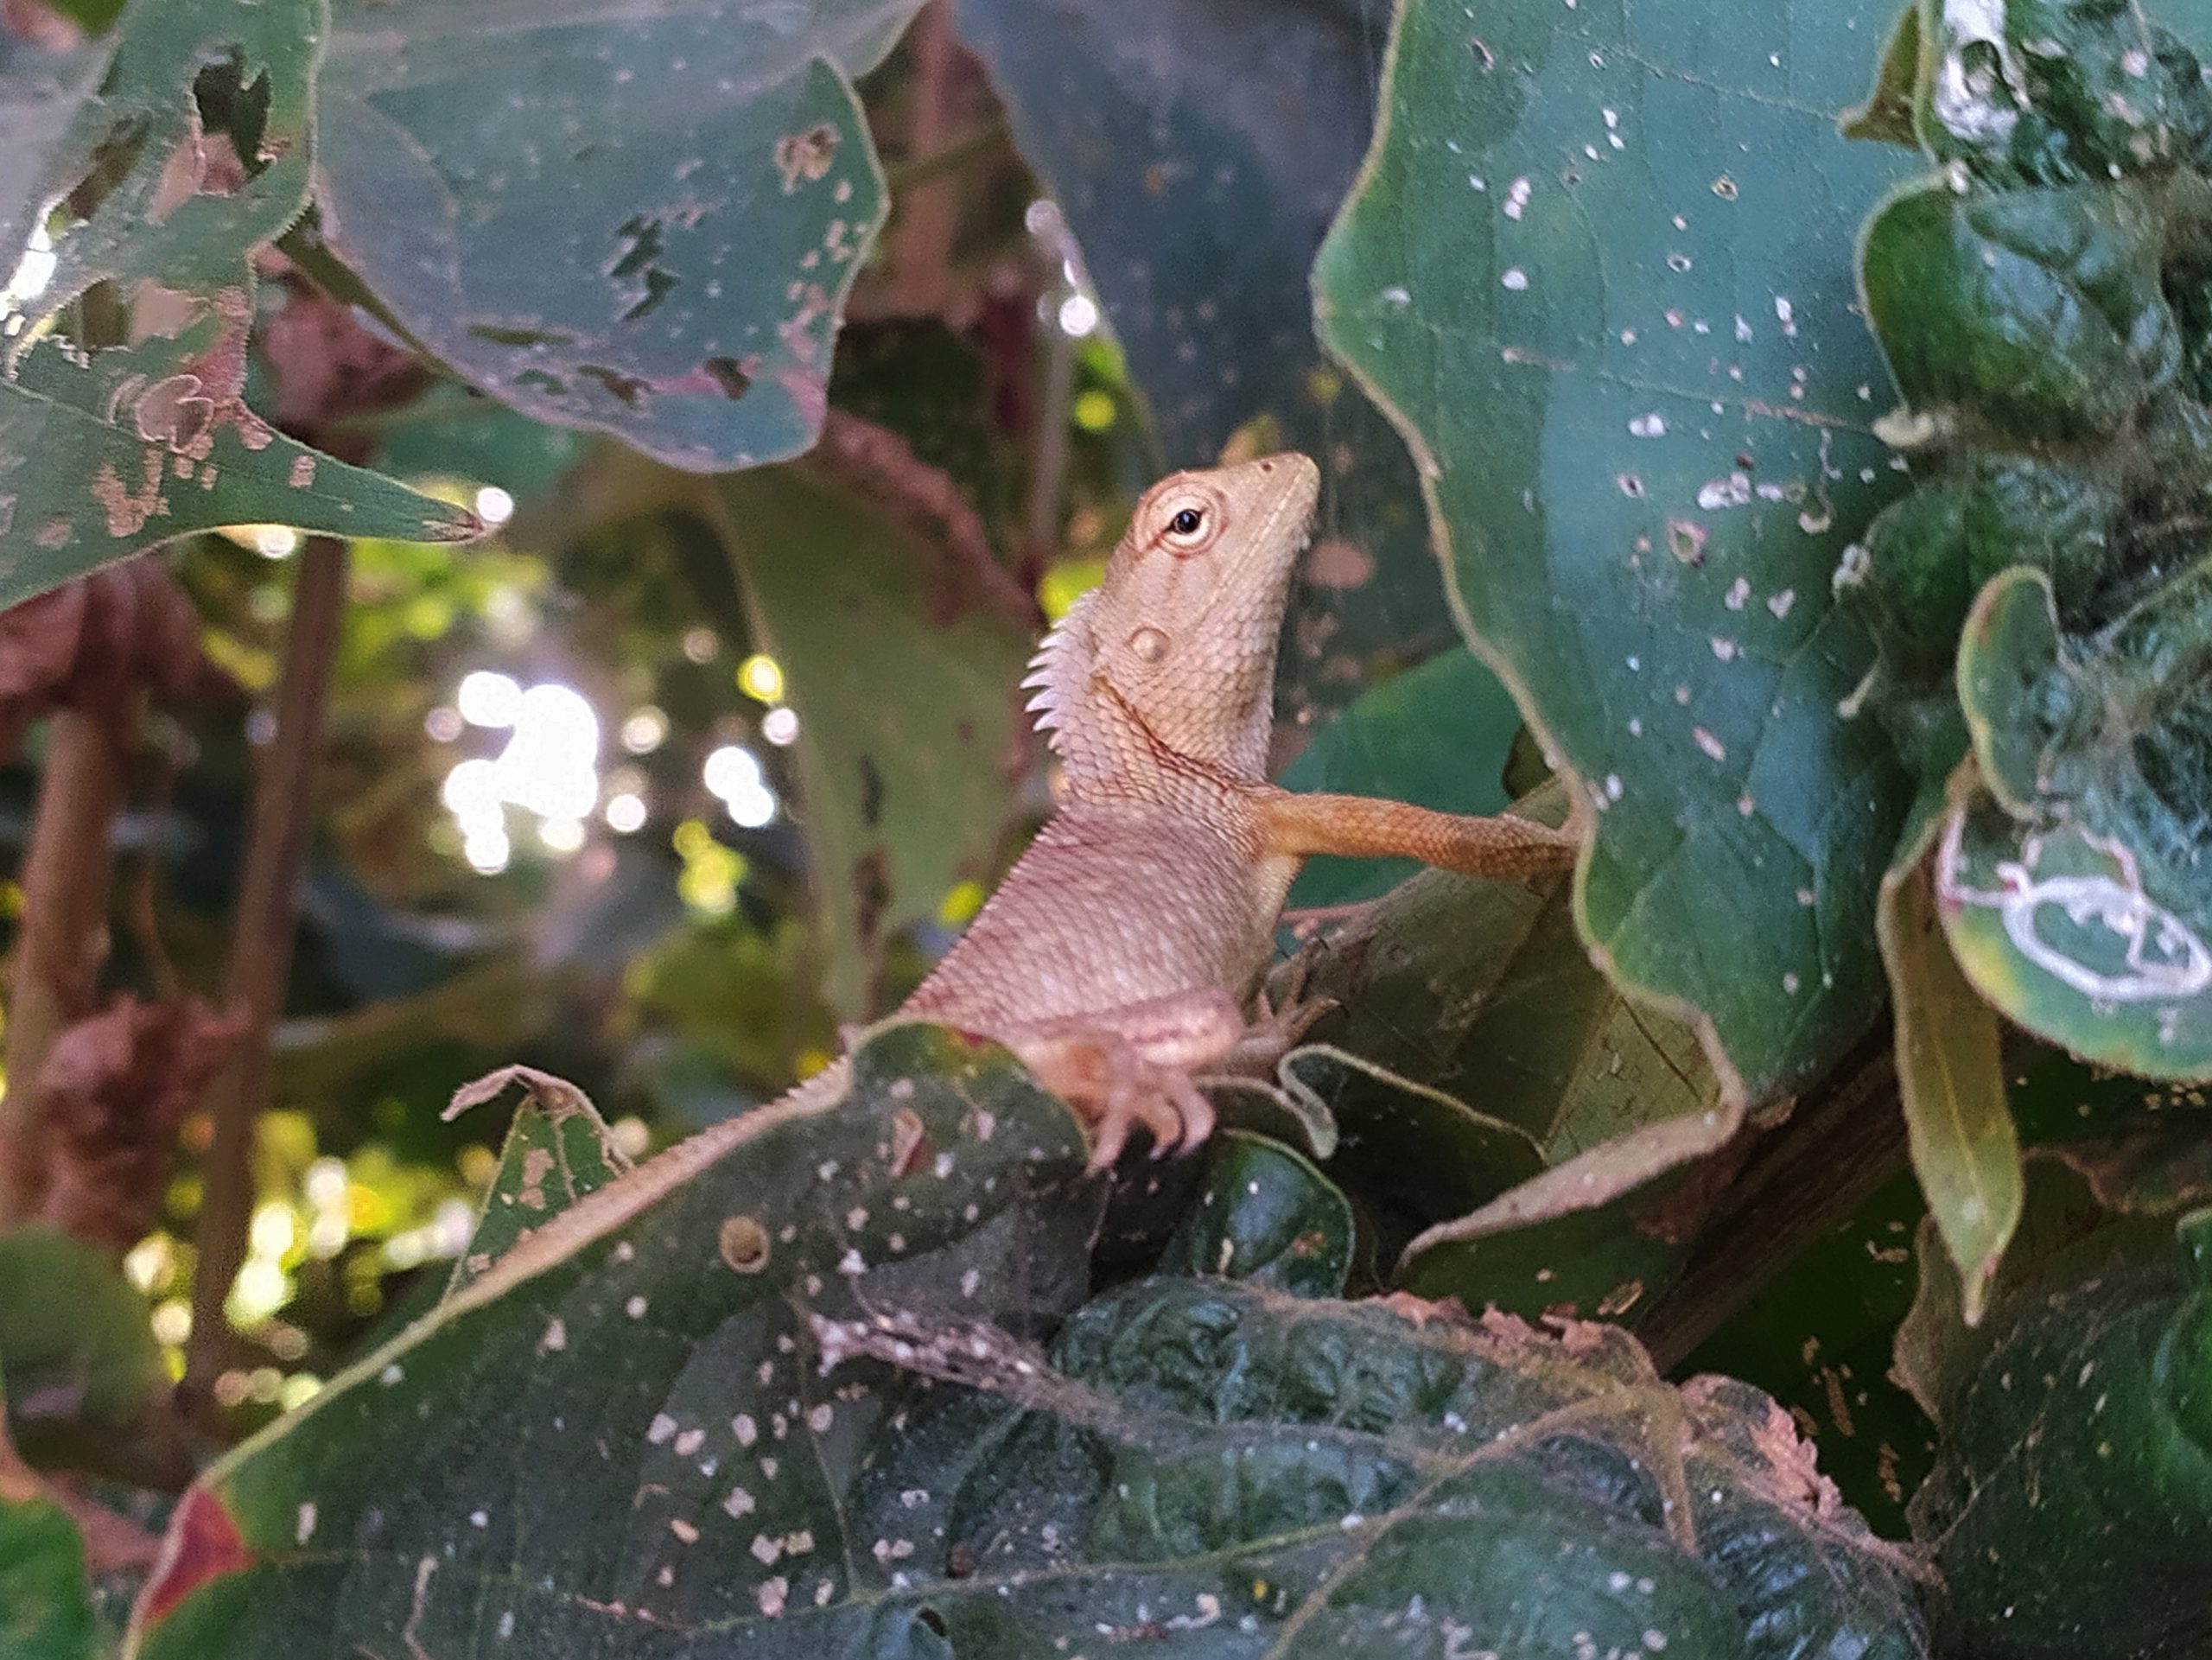 lizard on a leaf